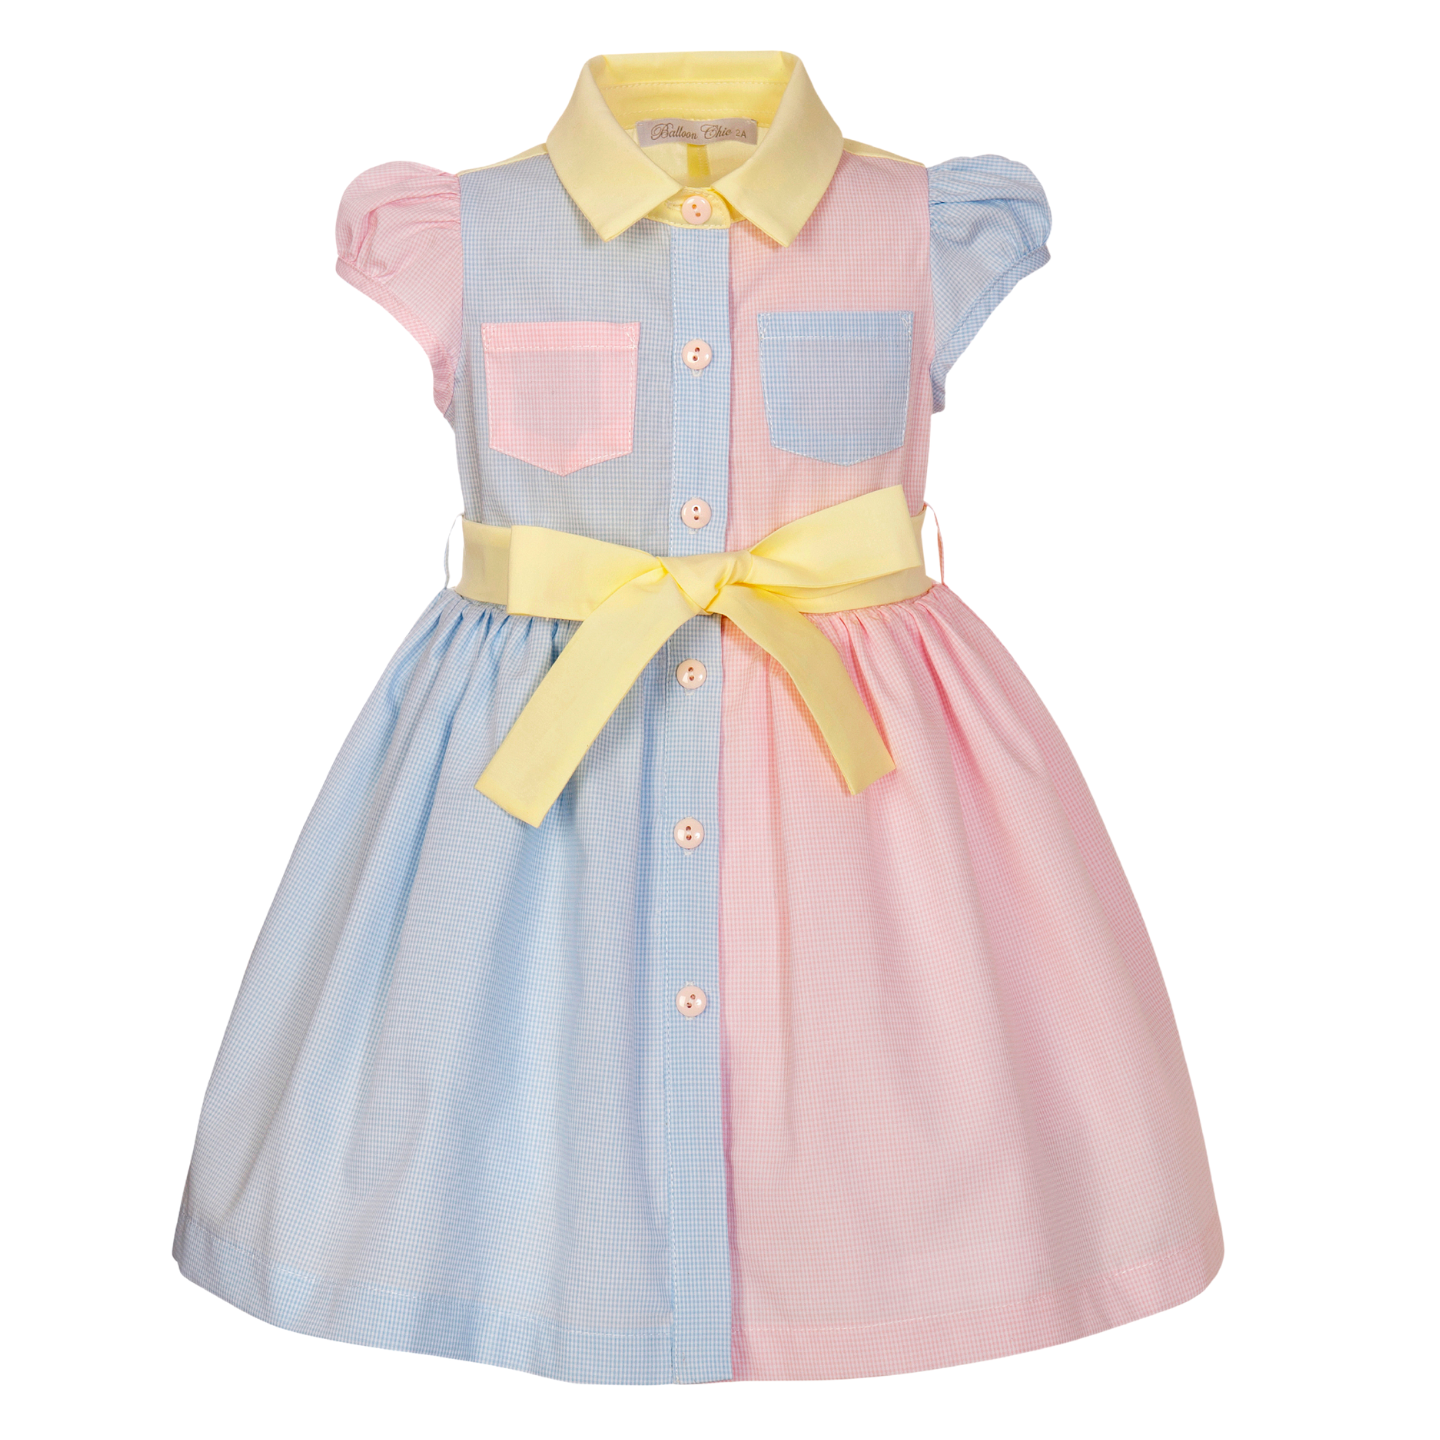 Balloon Chic Girls Lemon/Pink/Blue Shirt Dress